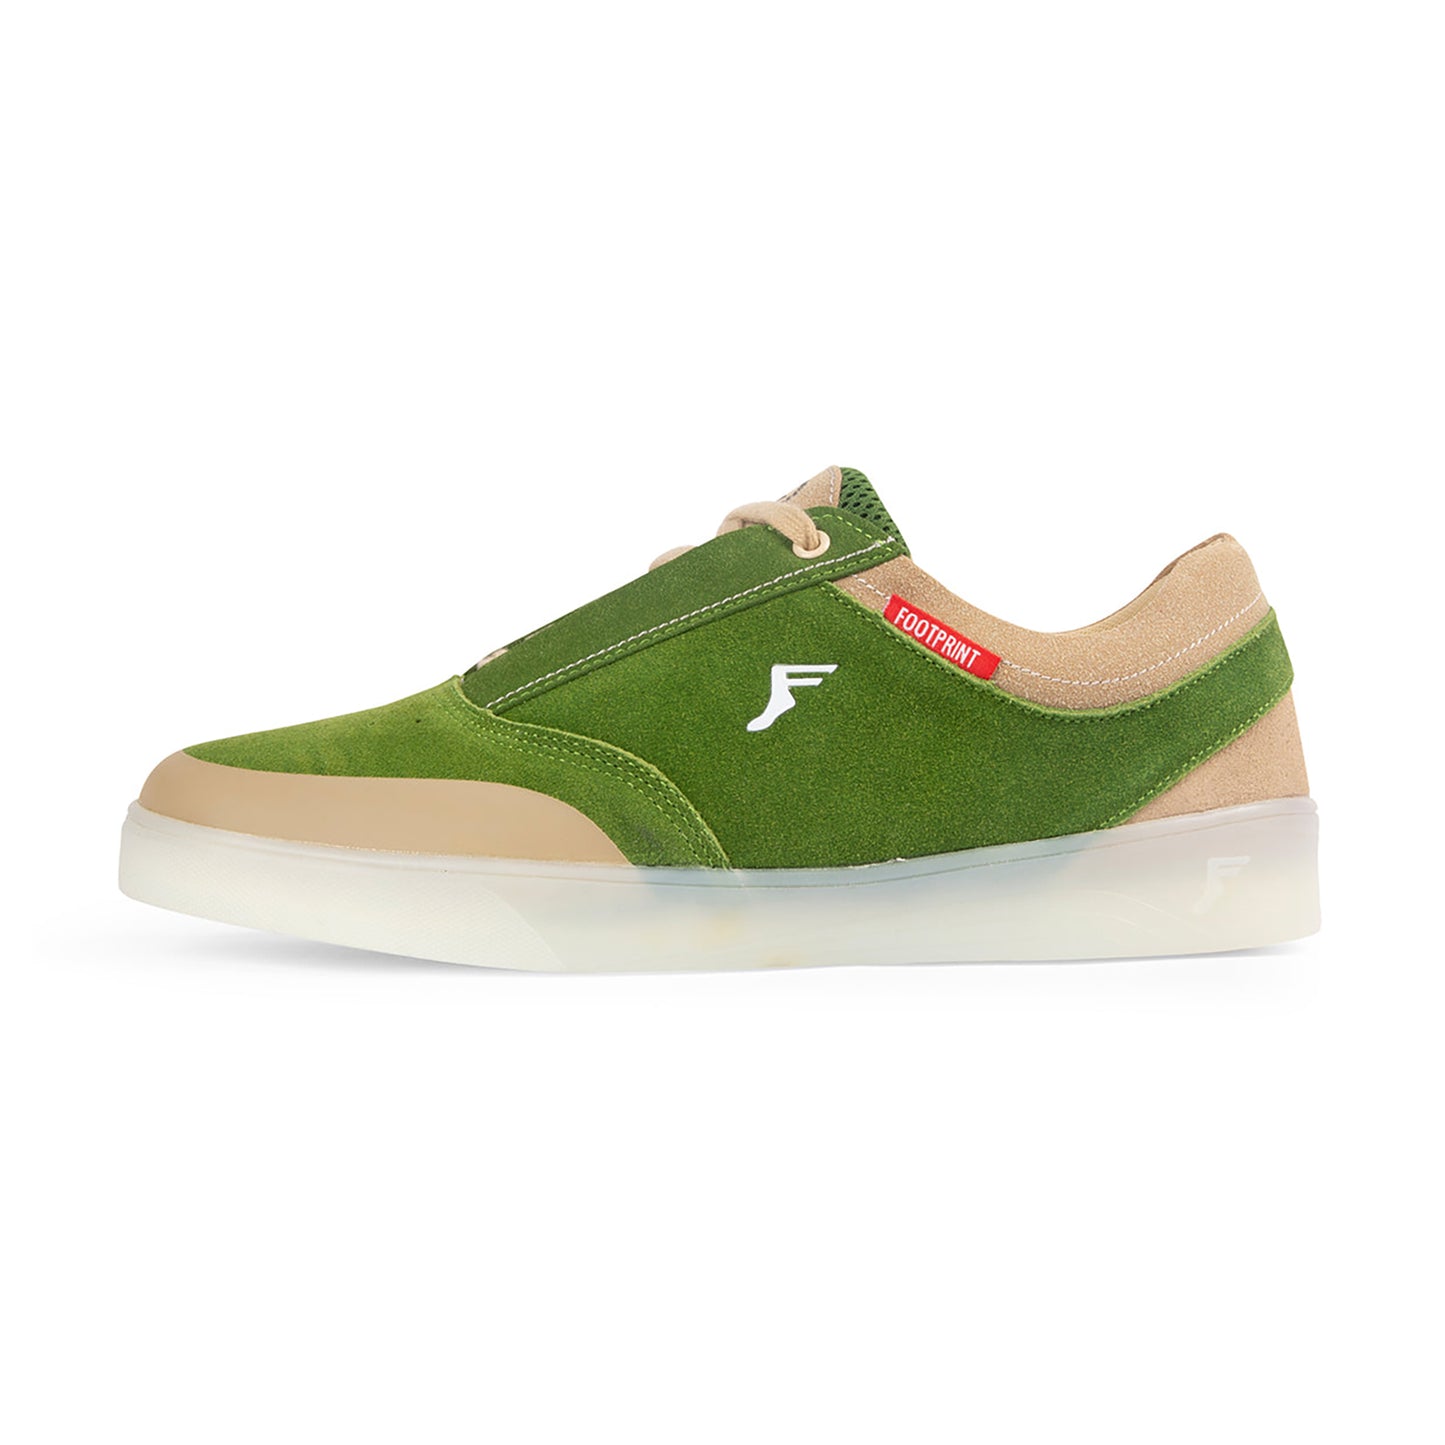 Green FP Footwear shoes 